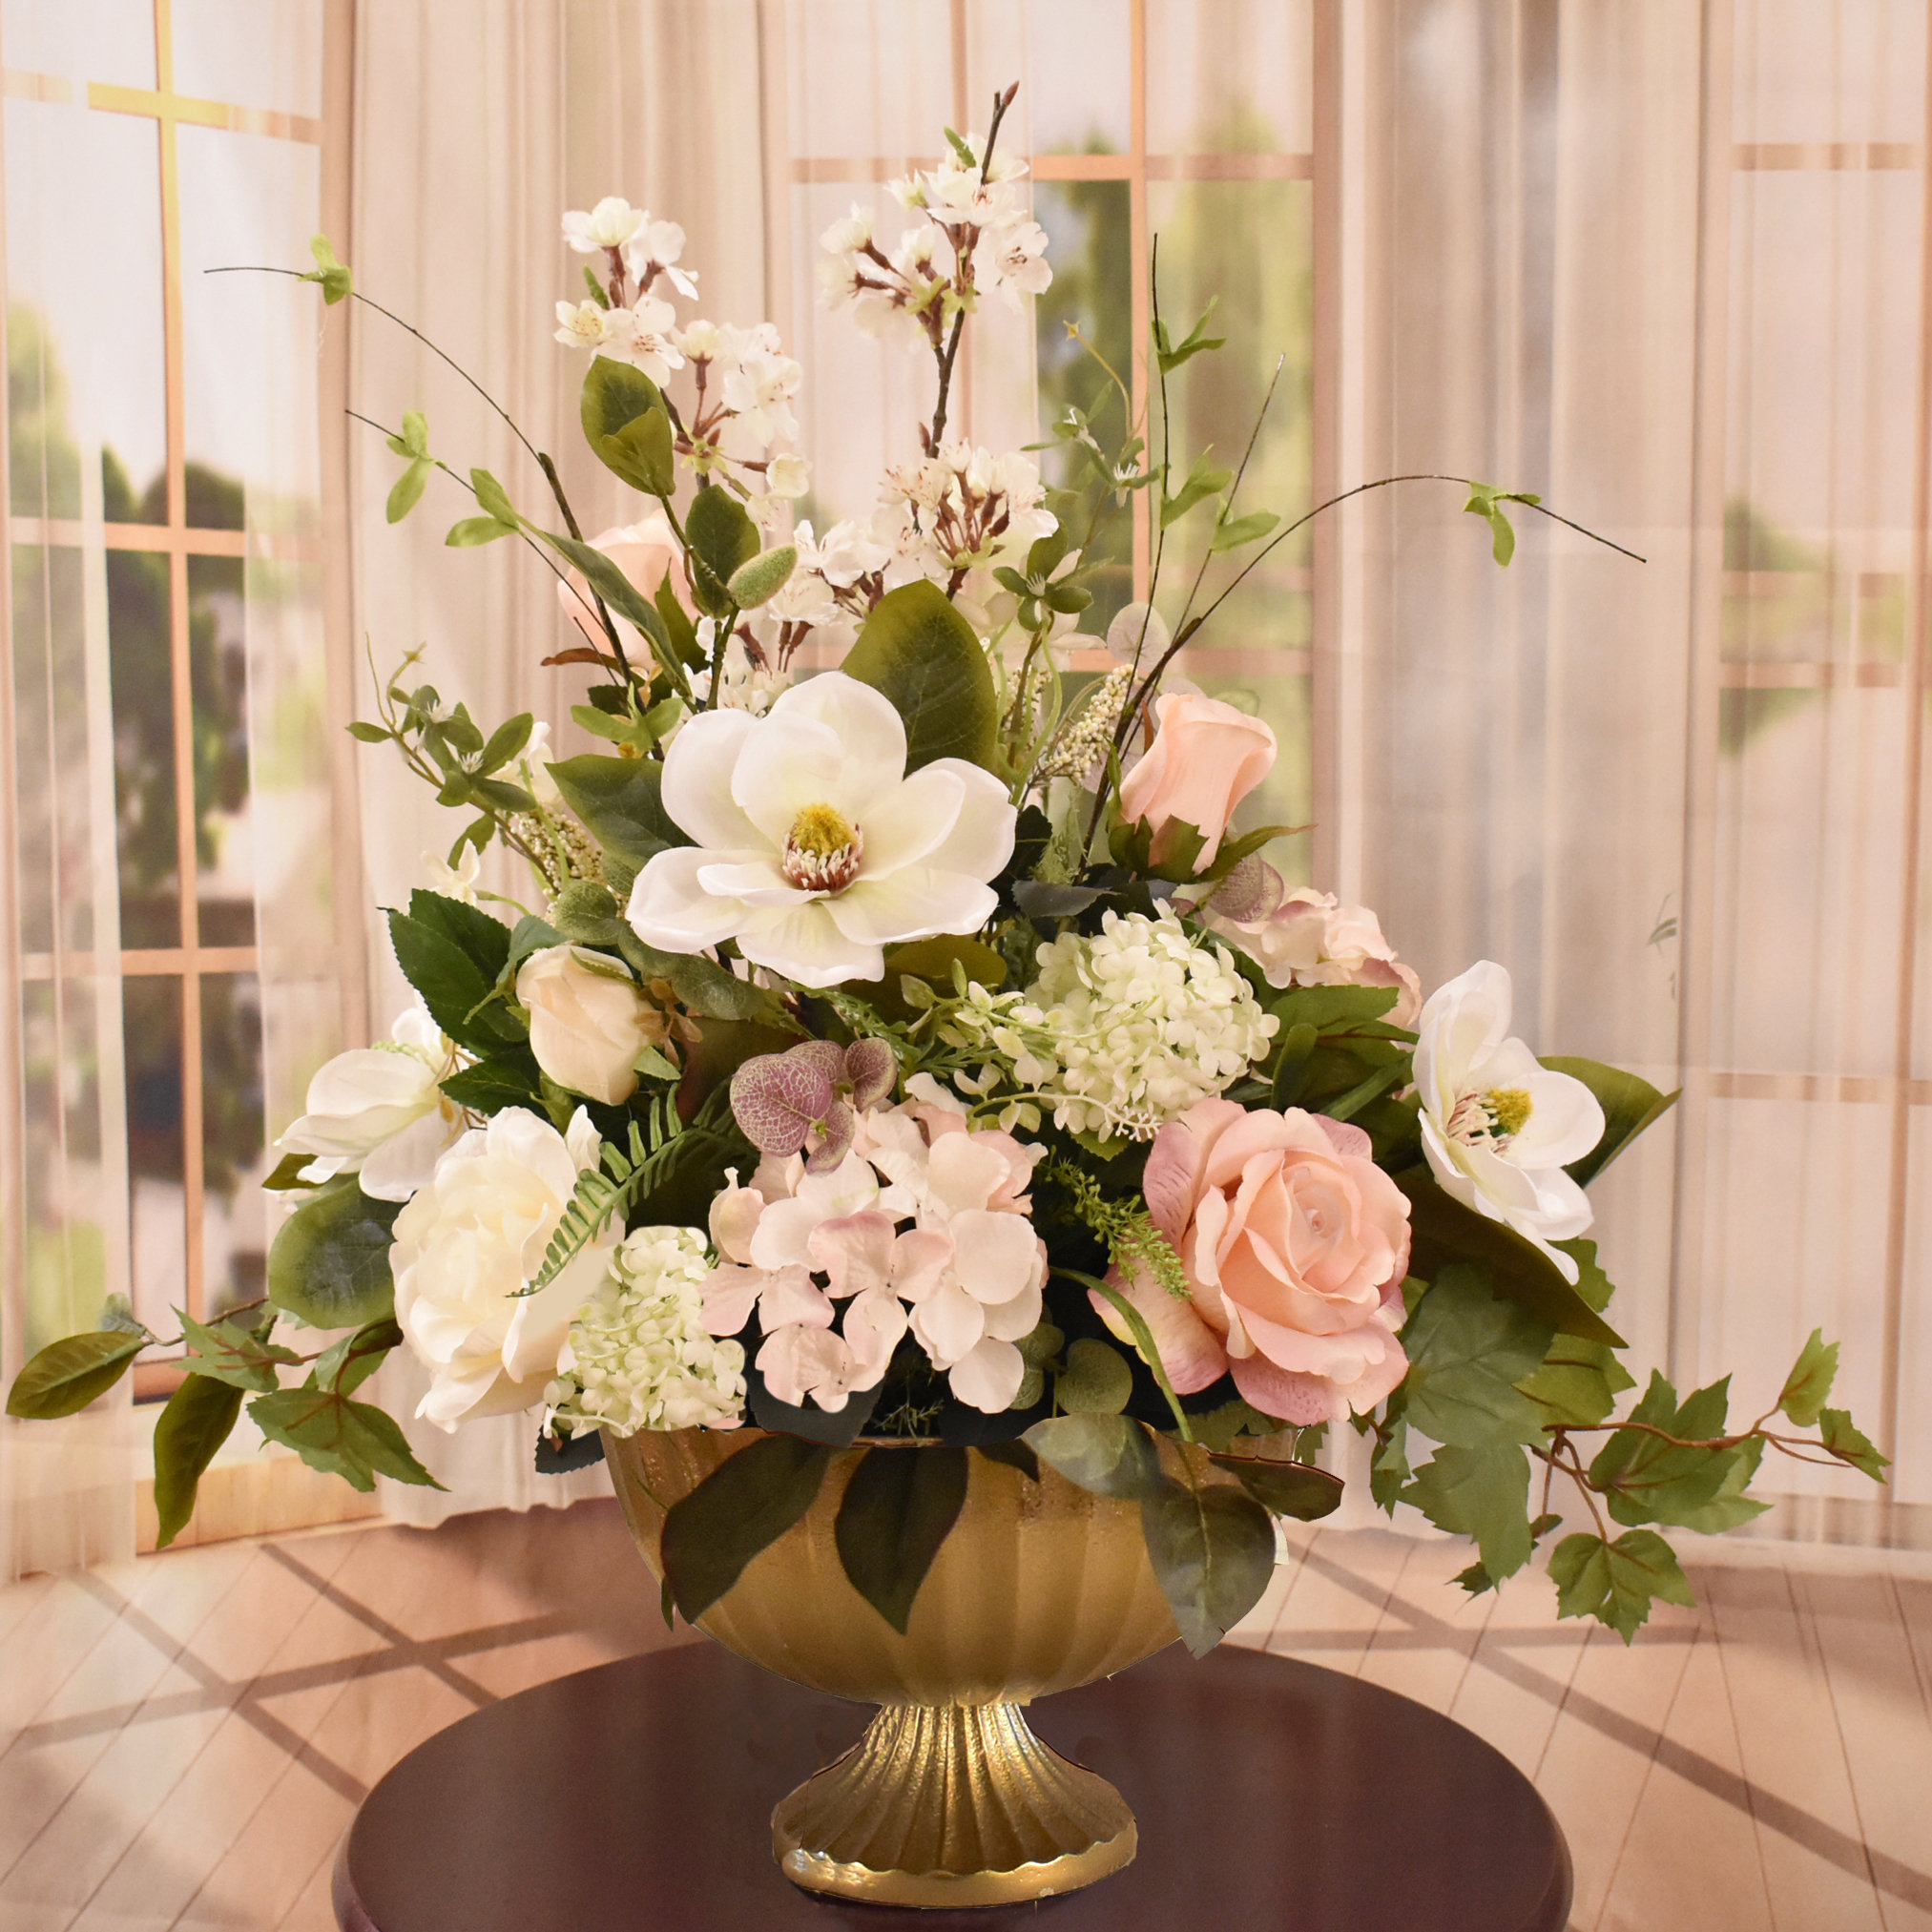 floral home decor magnolia centerpiece in vase & reviews | wayfair